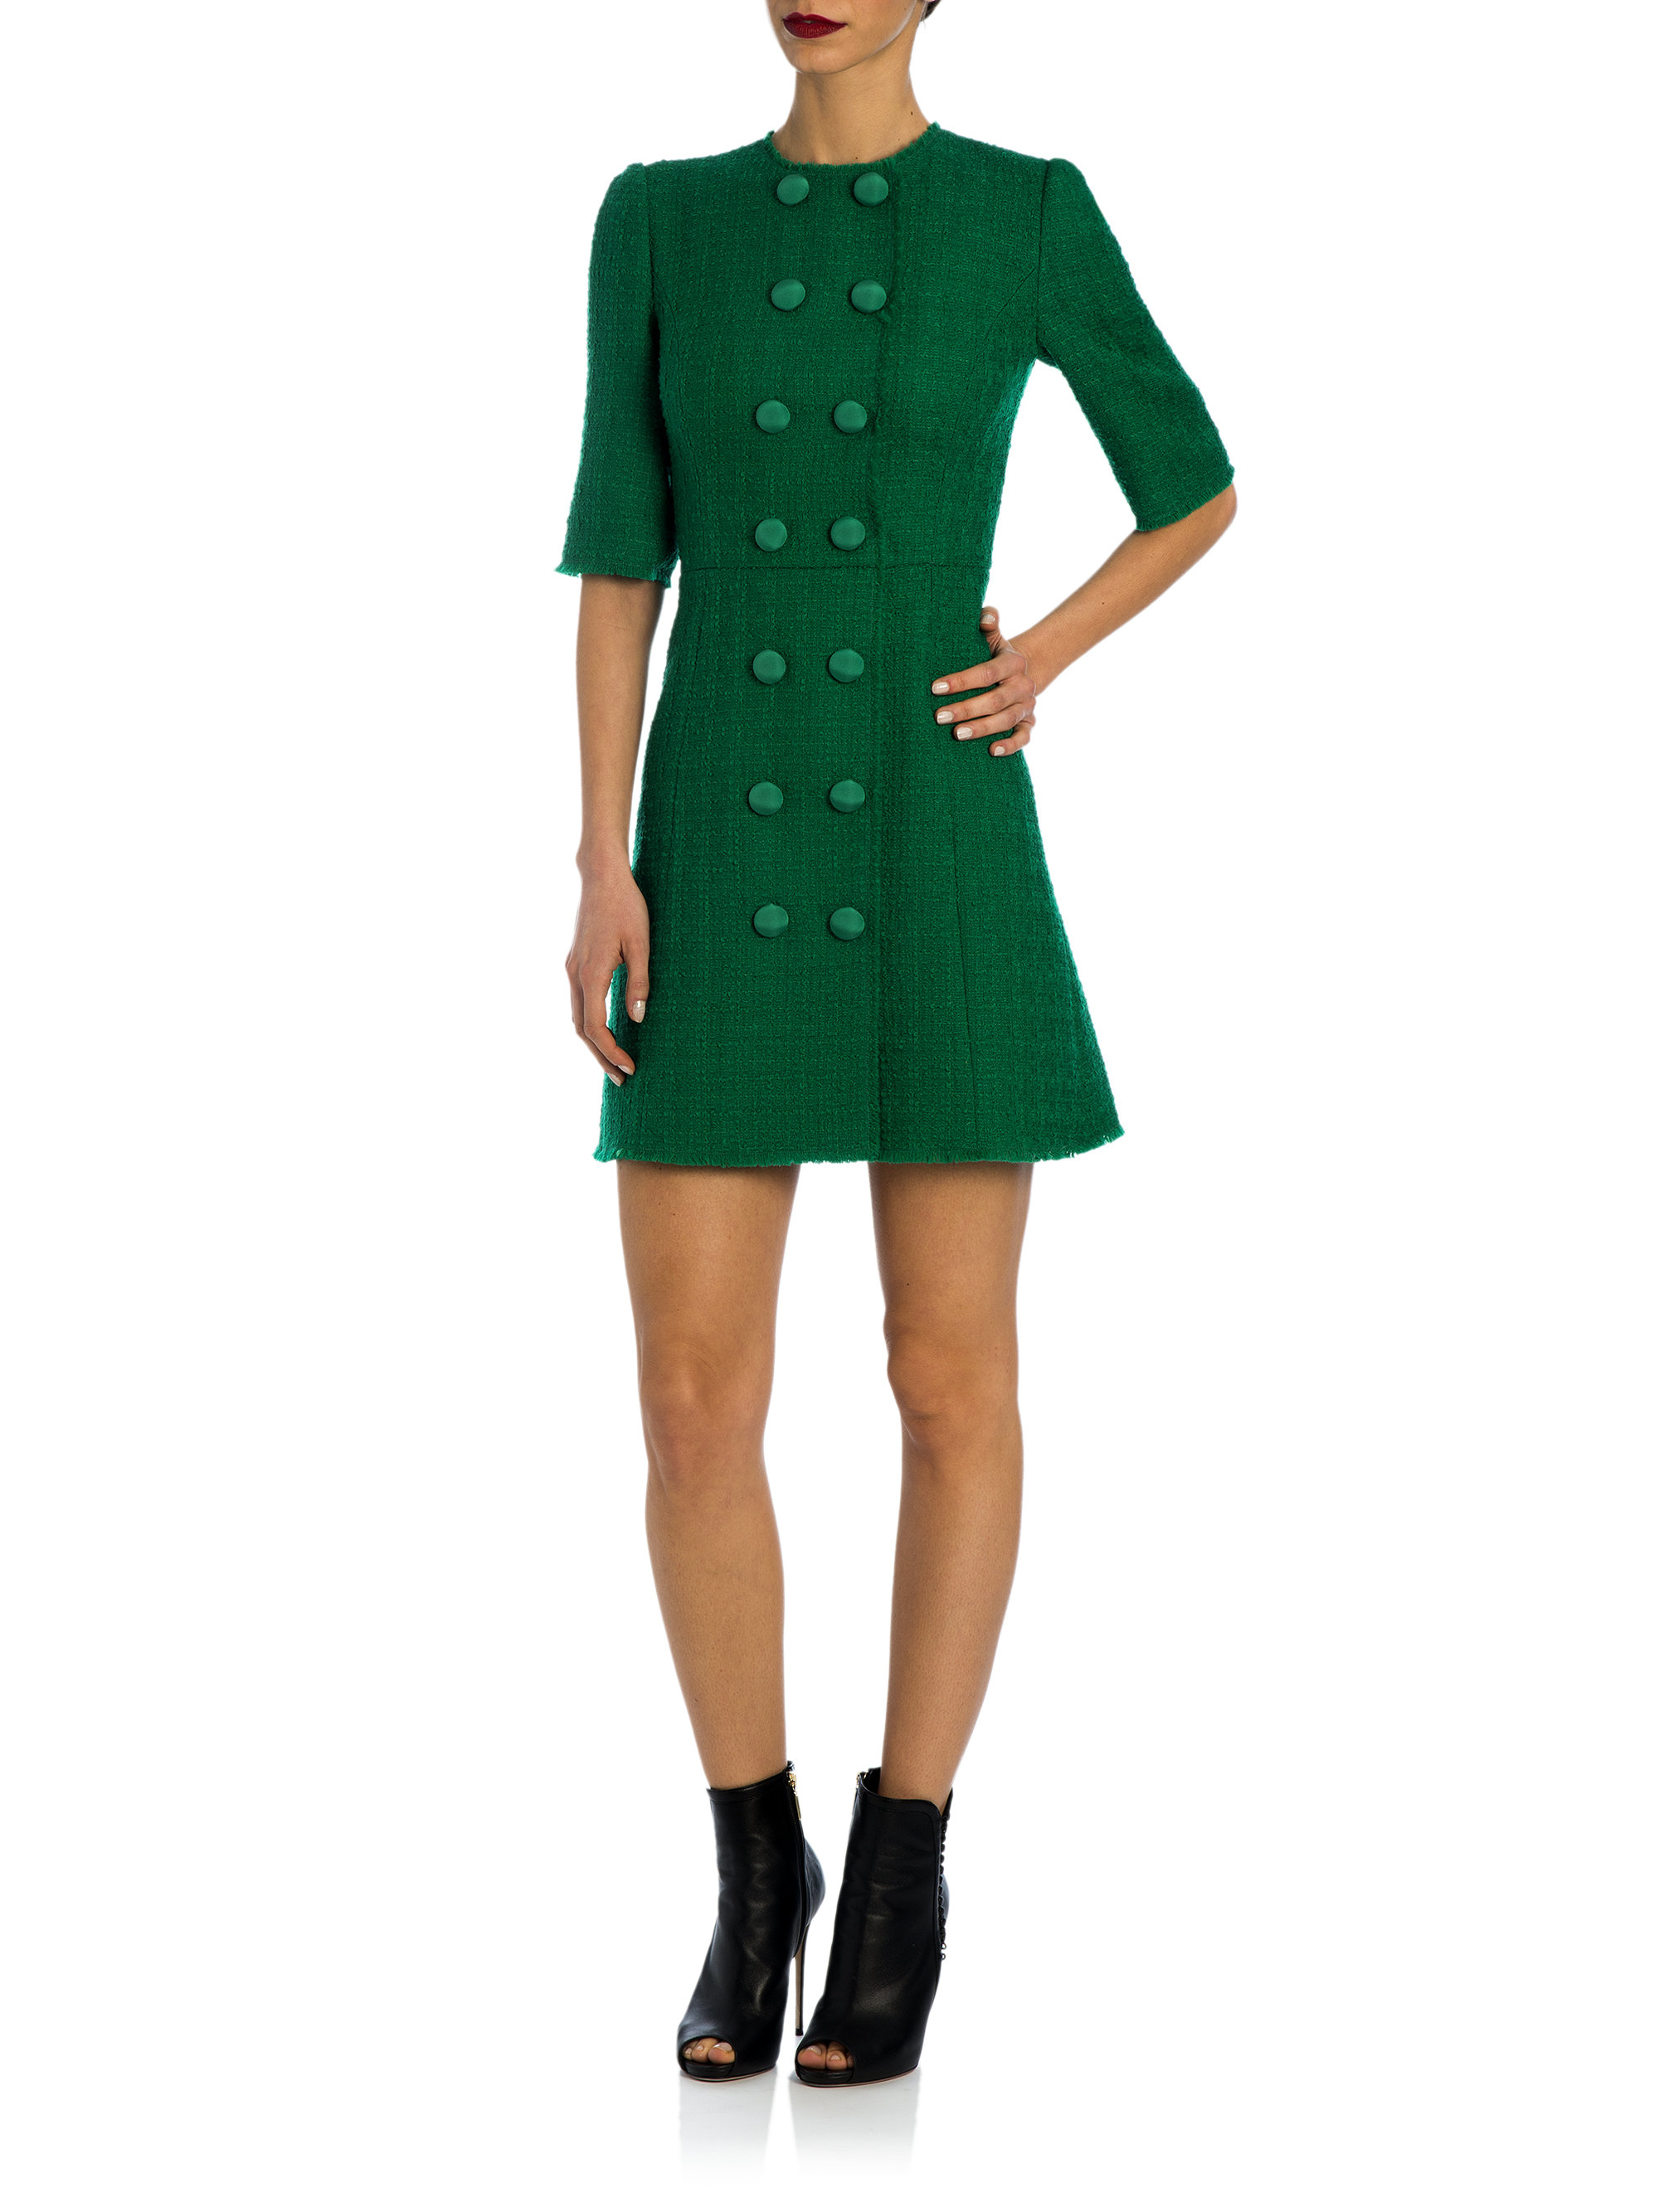 green tweed dress